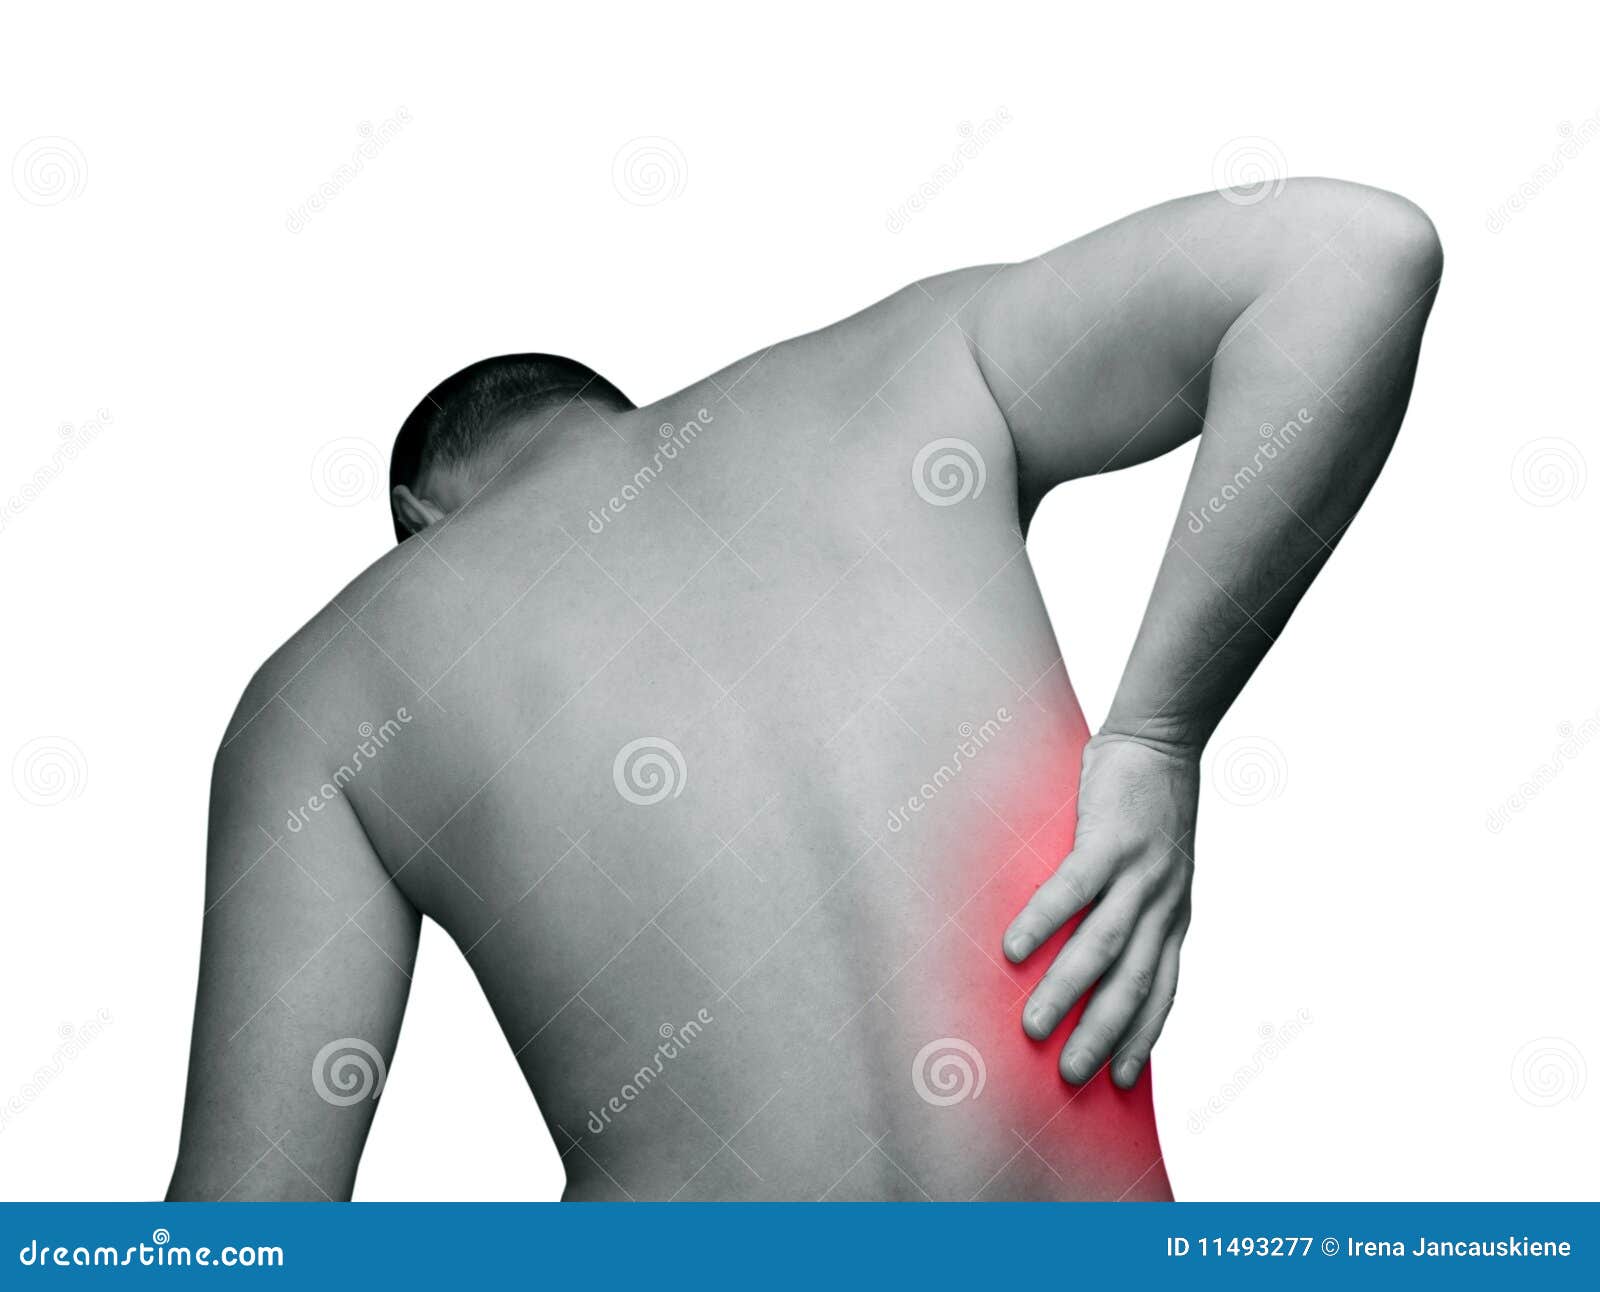 Болит поясница под ребрами. Боль в спине. Боль в спине справа. Болит спина справа под ребрами. Боль в спине справа под ребрами.